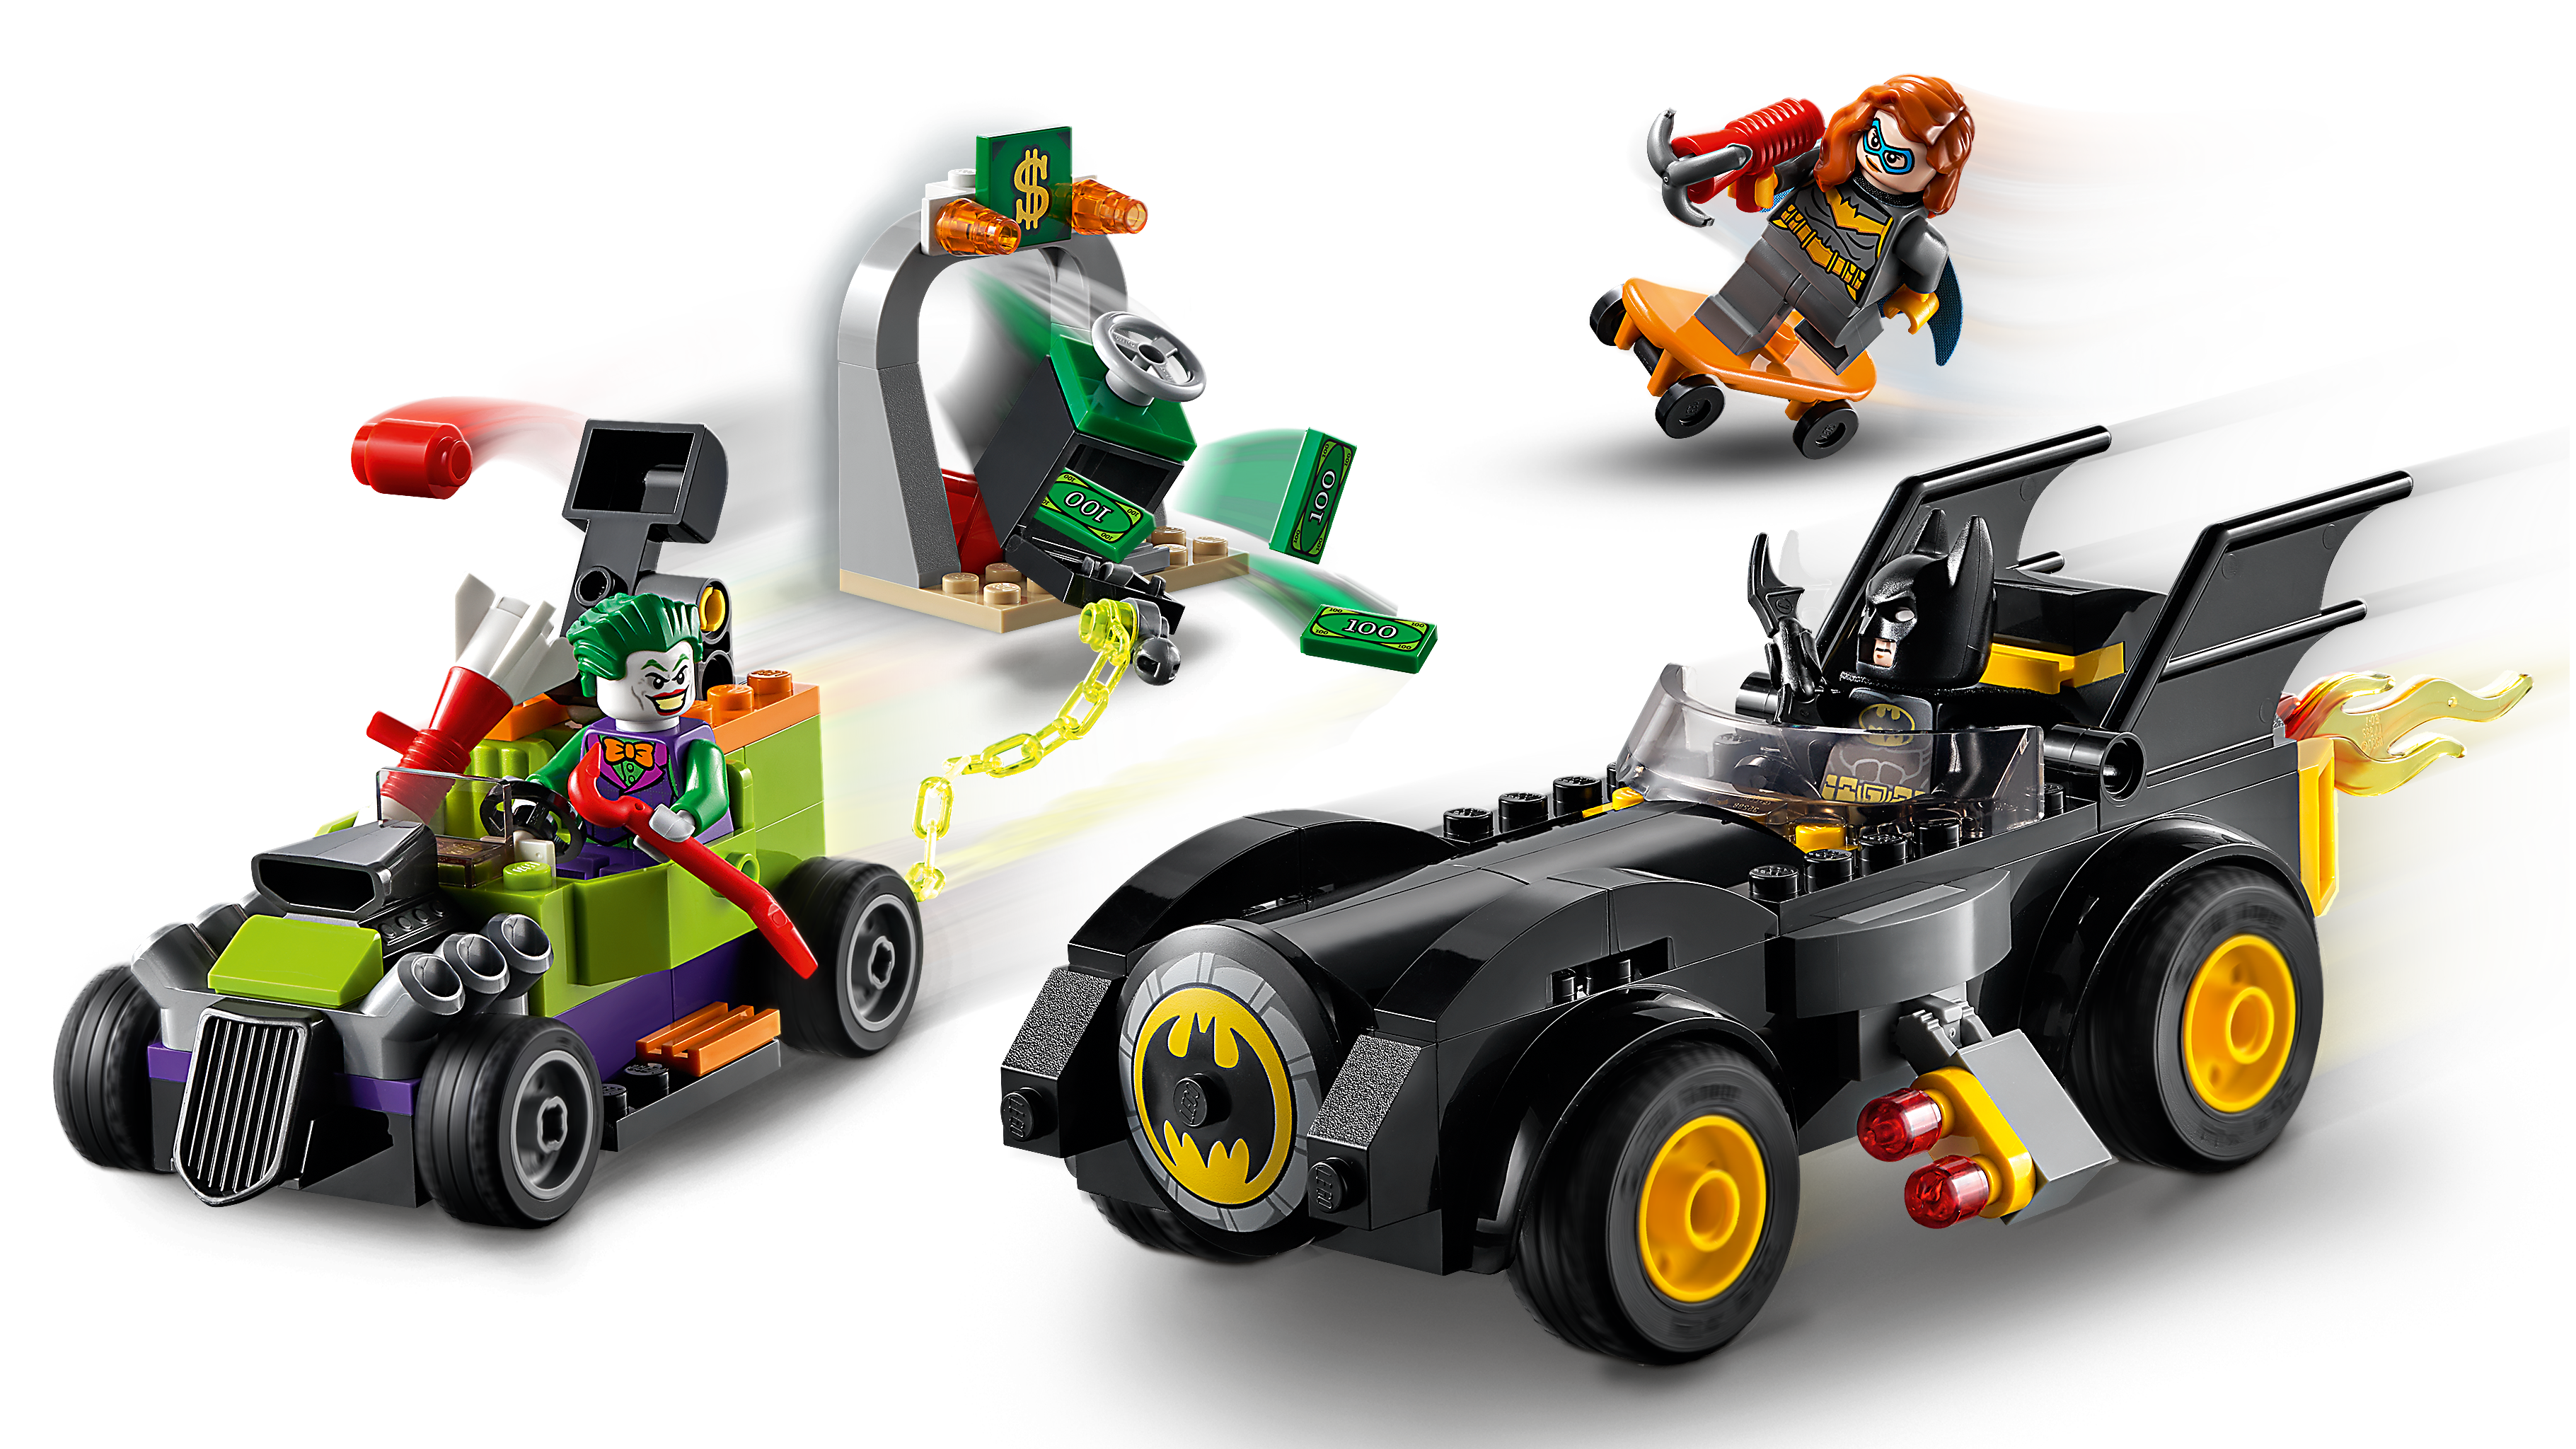 Batman™ vs. The Joker™: Batmobile™ Chase 76180 | DC | Buy online at the  Official LEGO® Shop US